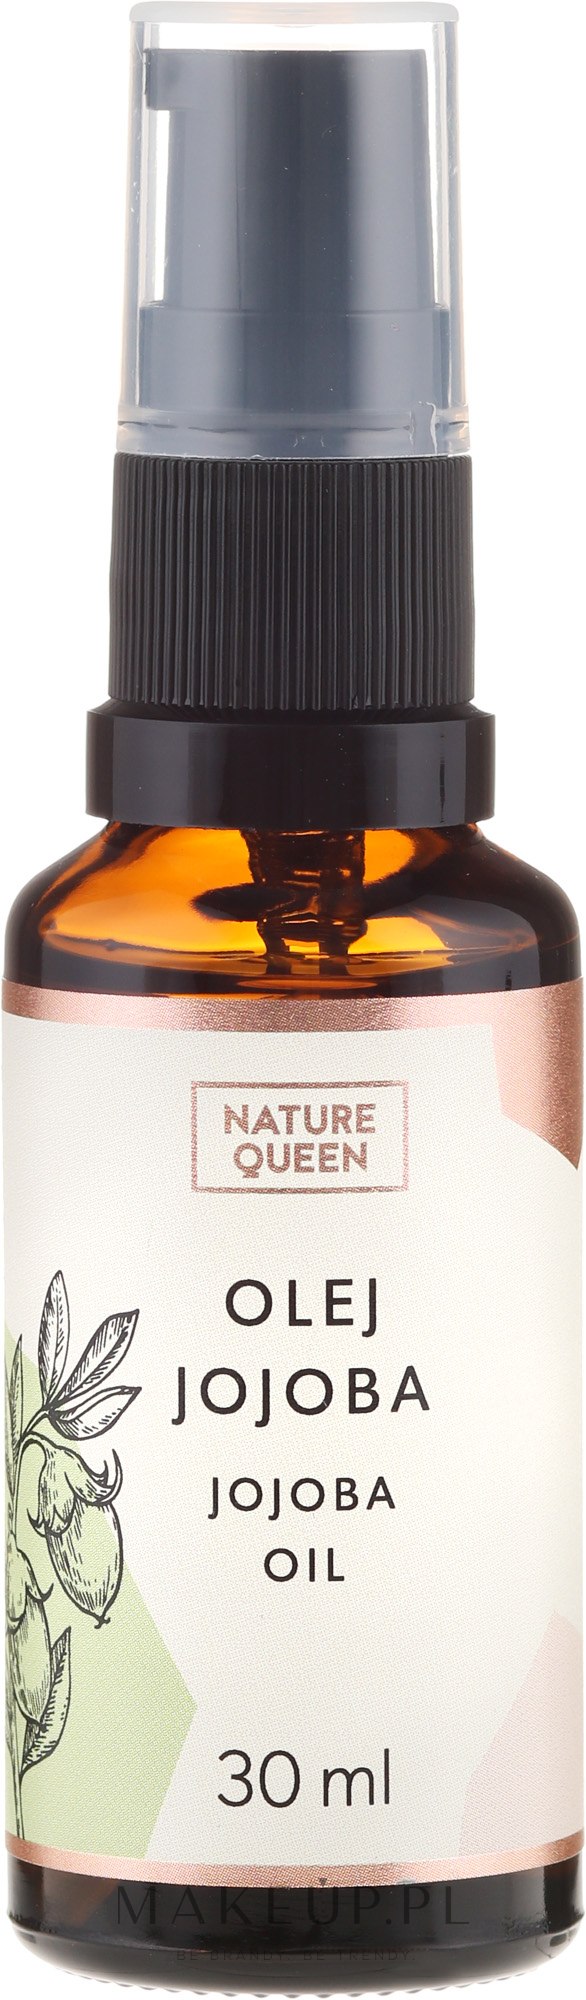 Olej jojoba - Nature Queen Jojoba Oil — Zdjęcie 30 ml